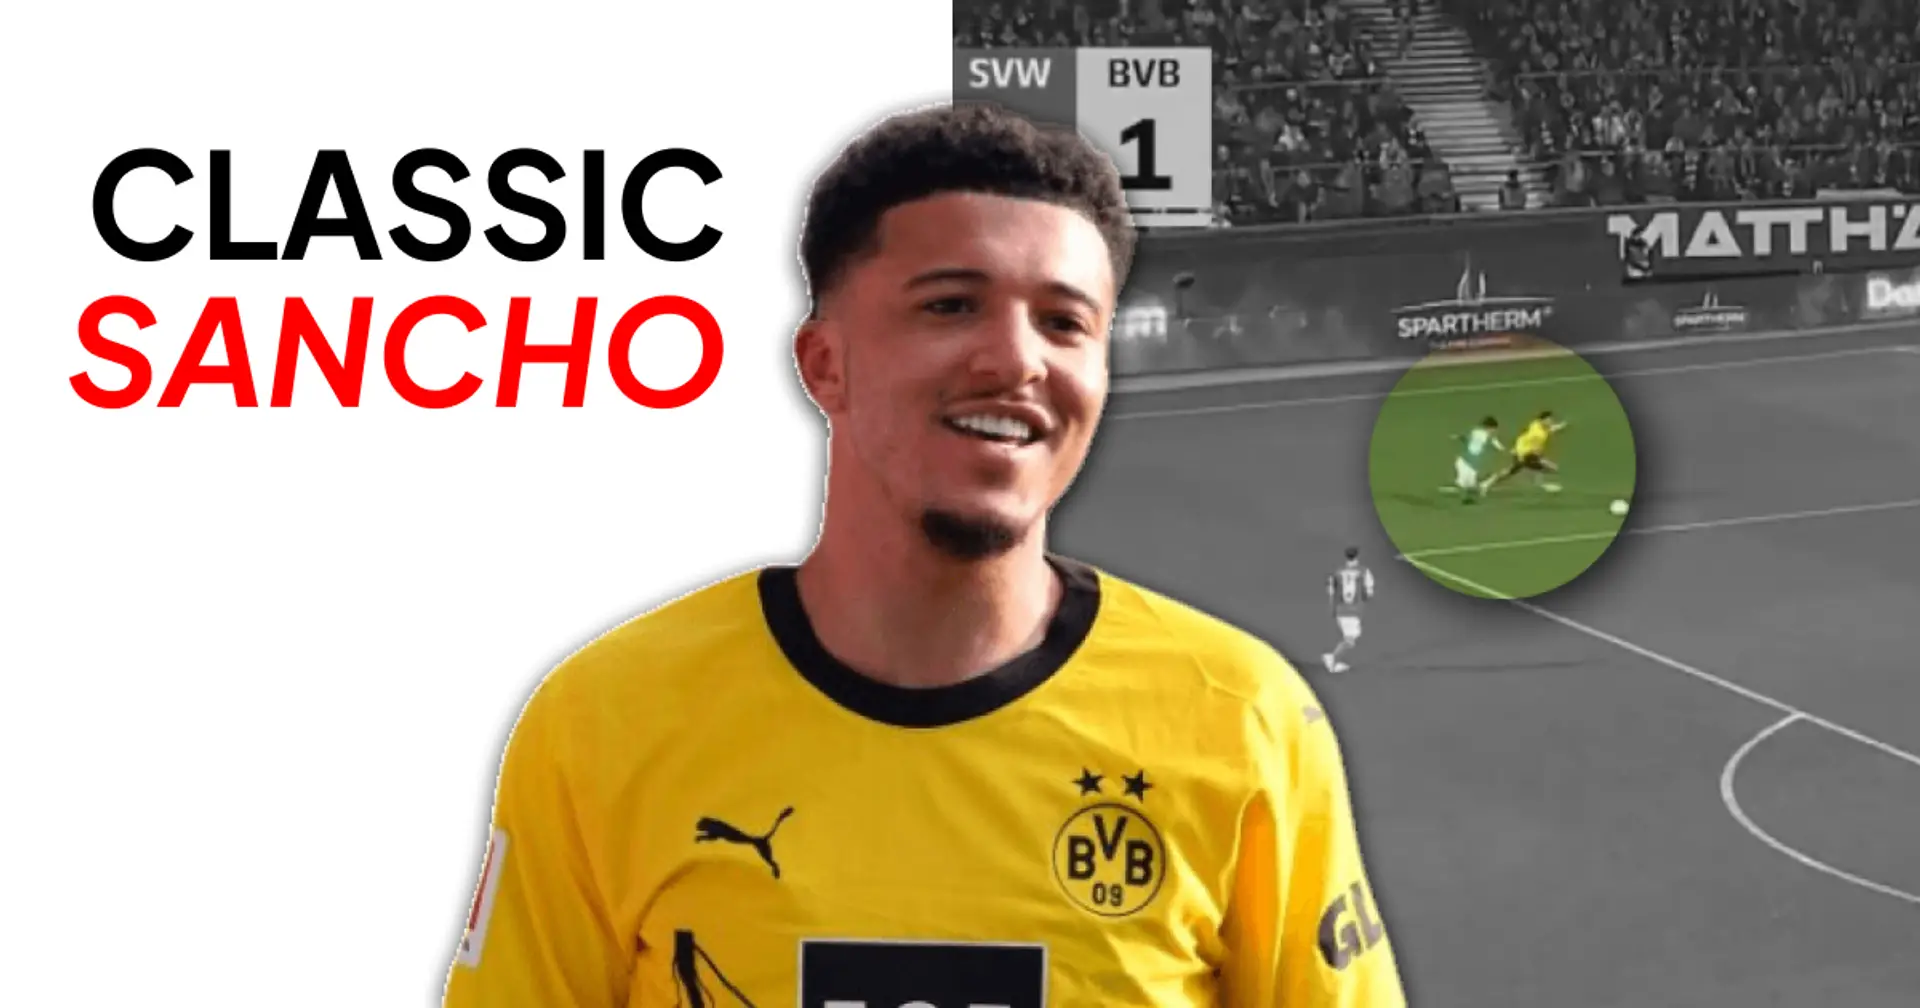 Sancho scores classic Sancho goal for Dortmund - dribbles, cuts inside & hits home 